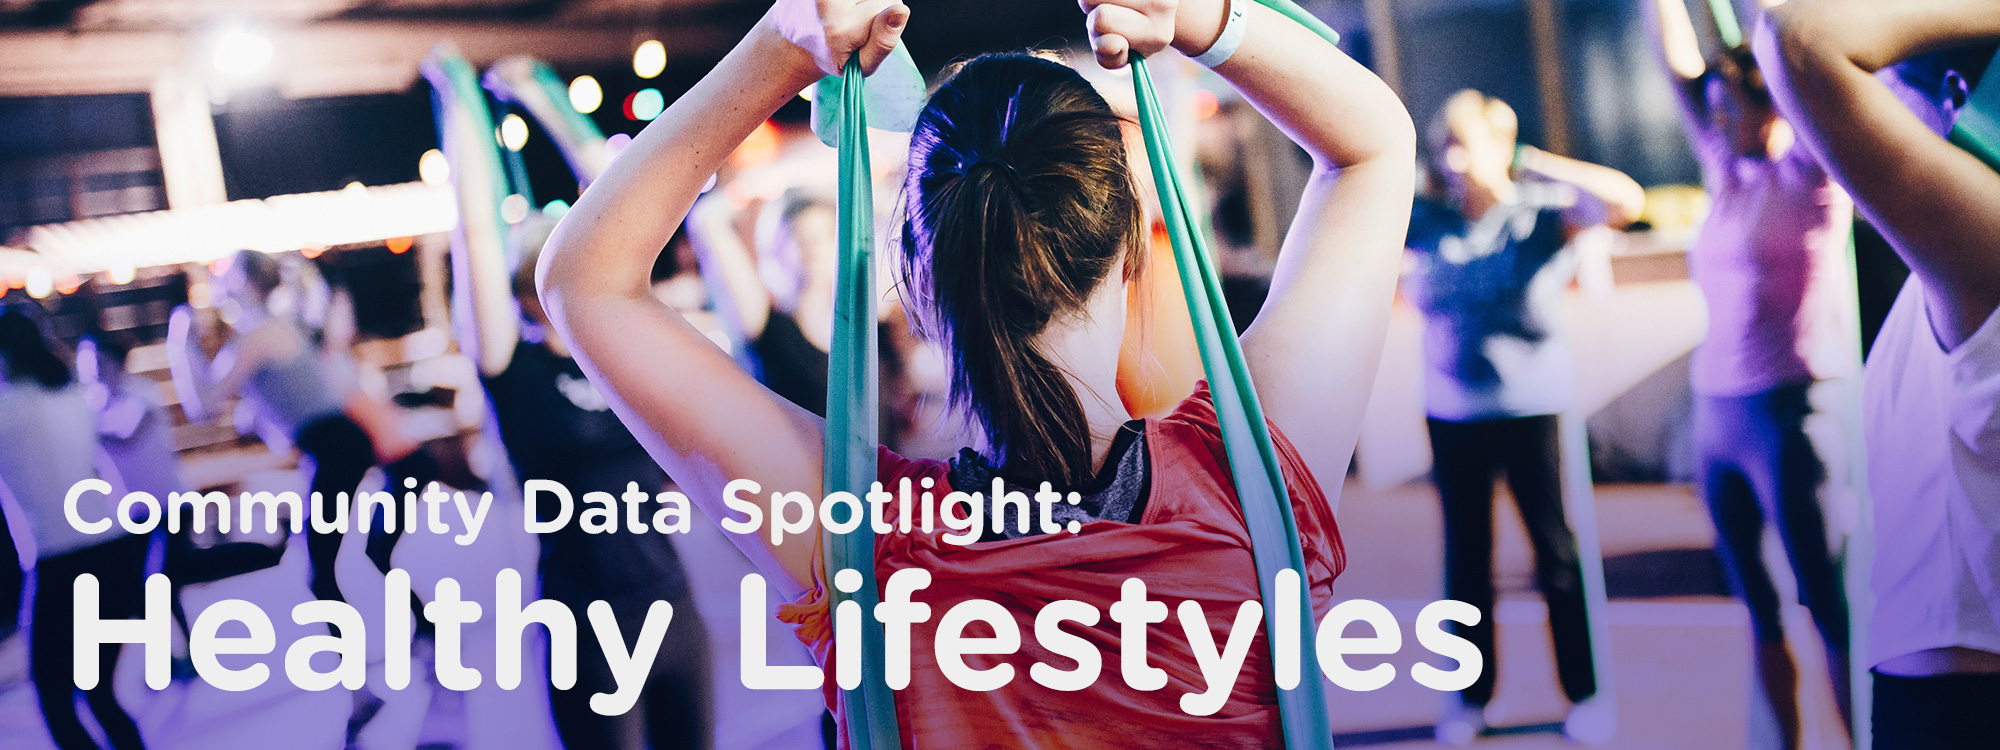 Community Data Spotlight: Healthy Lifestyles